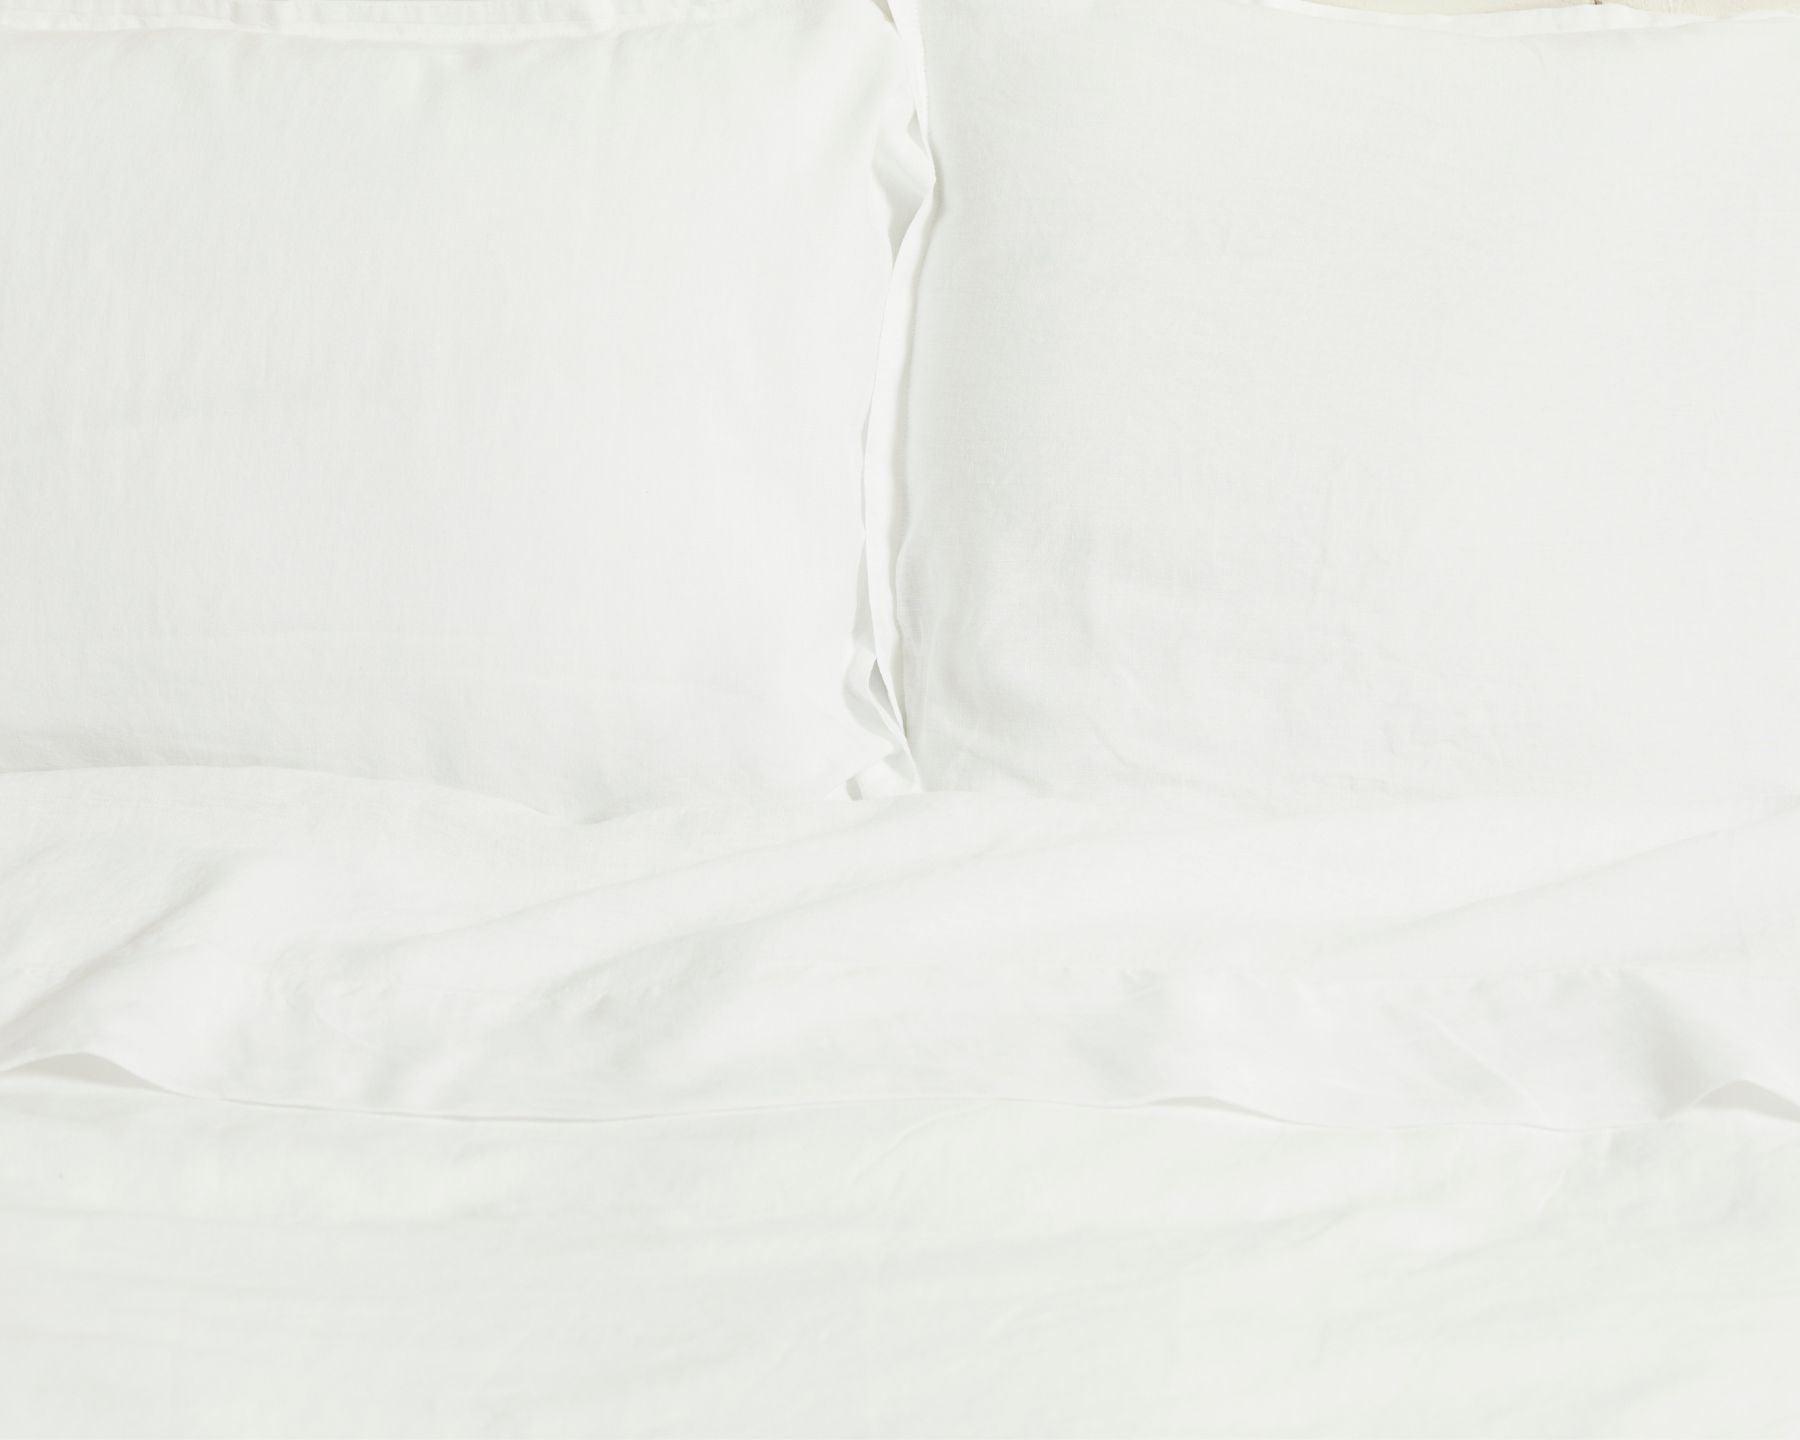 Organic linen top sheet from premium European flax. White color.